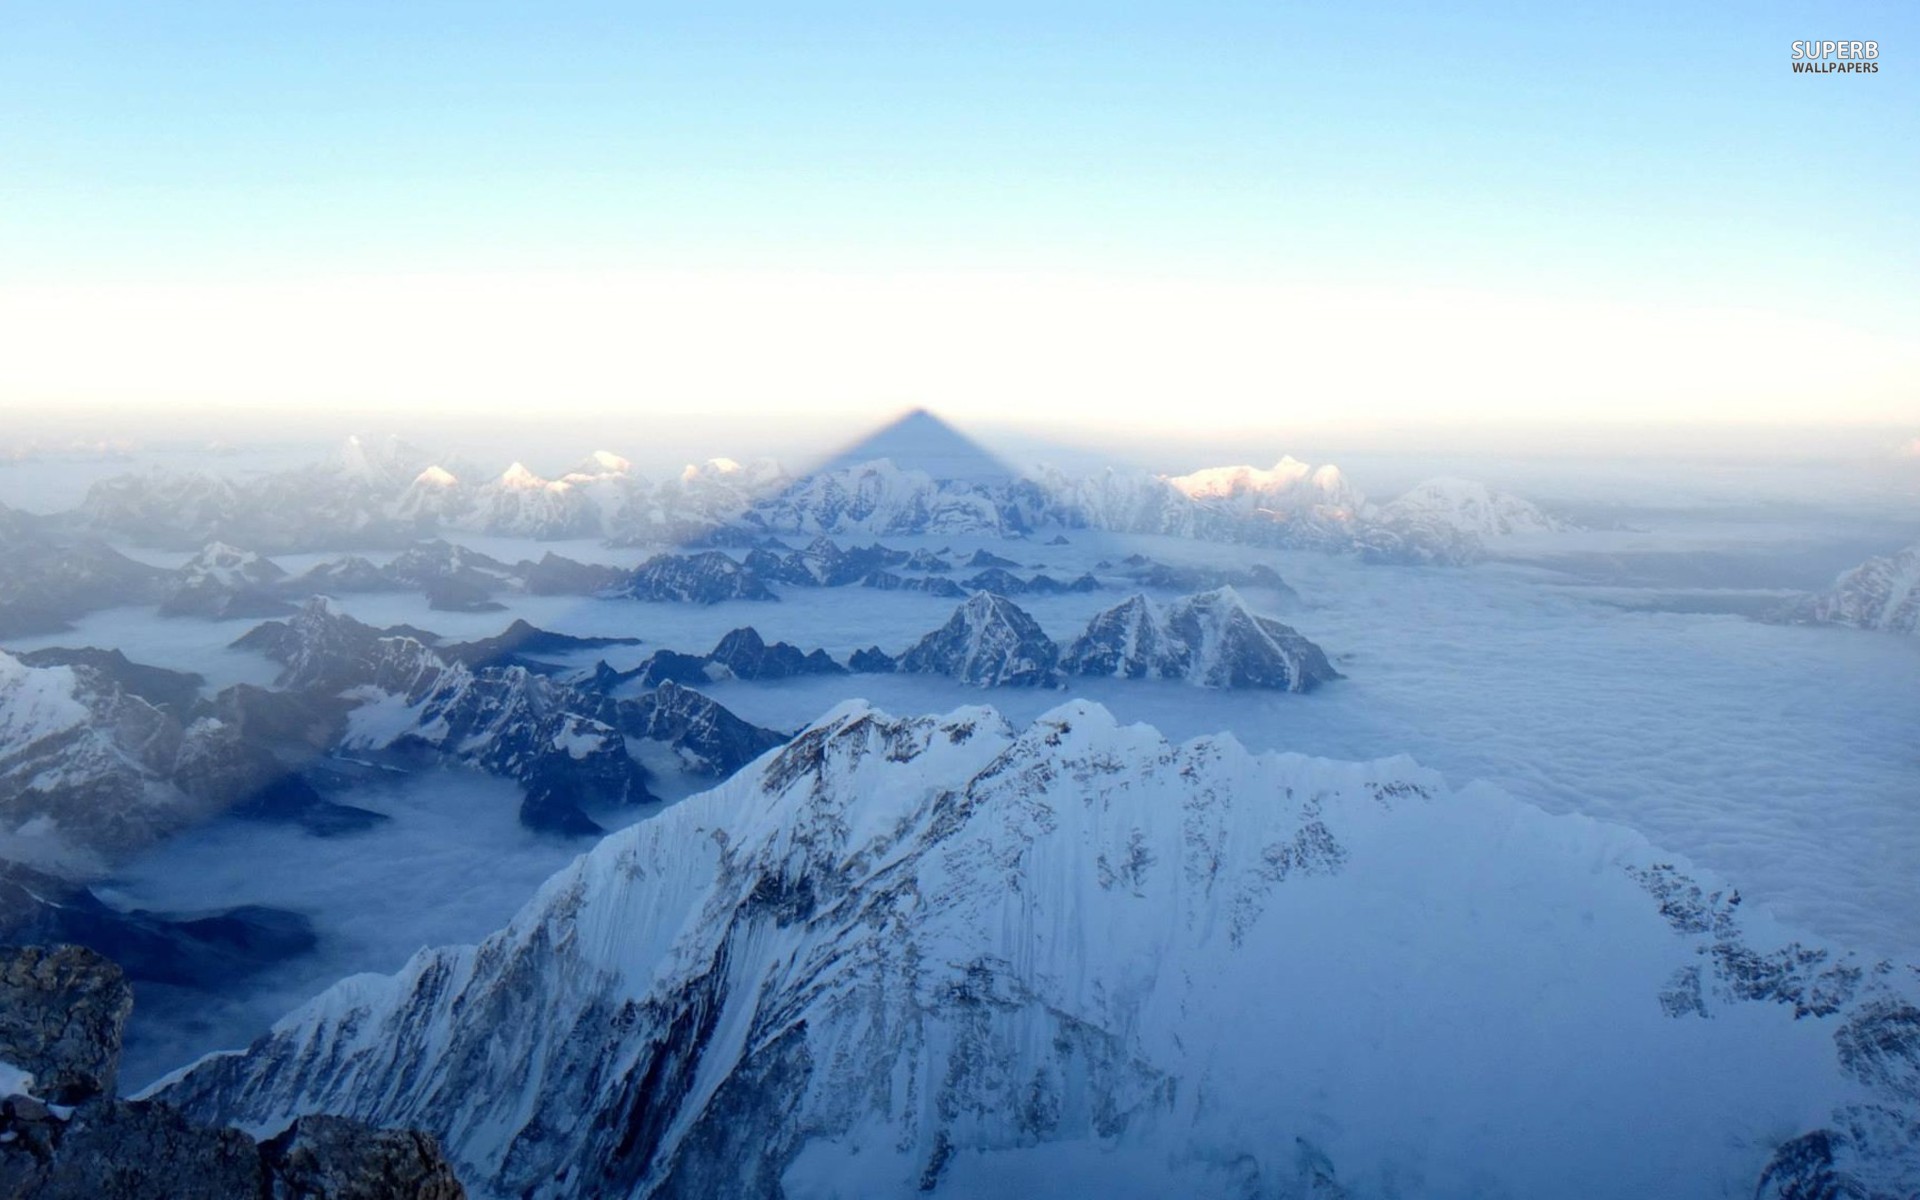 Mount Everest Wallpaper Wonderful Stock Photos